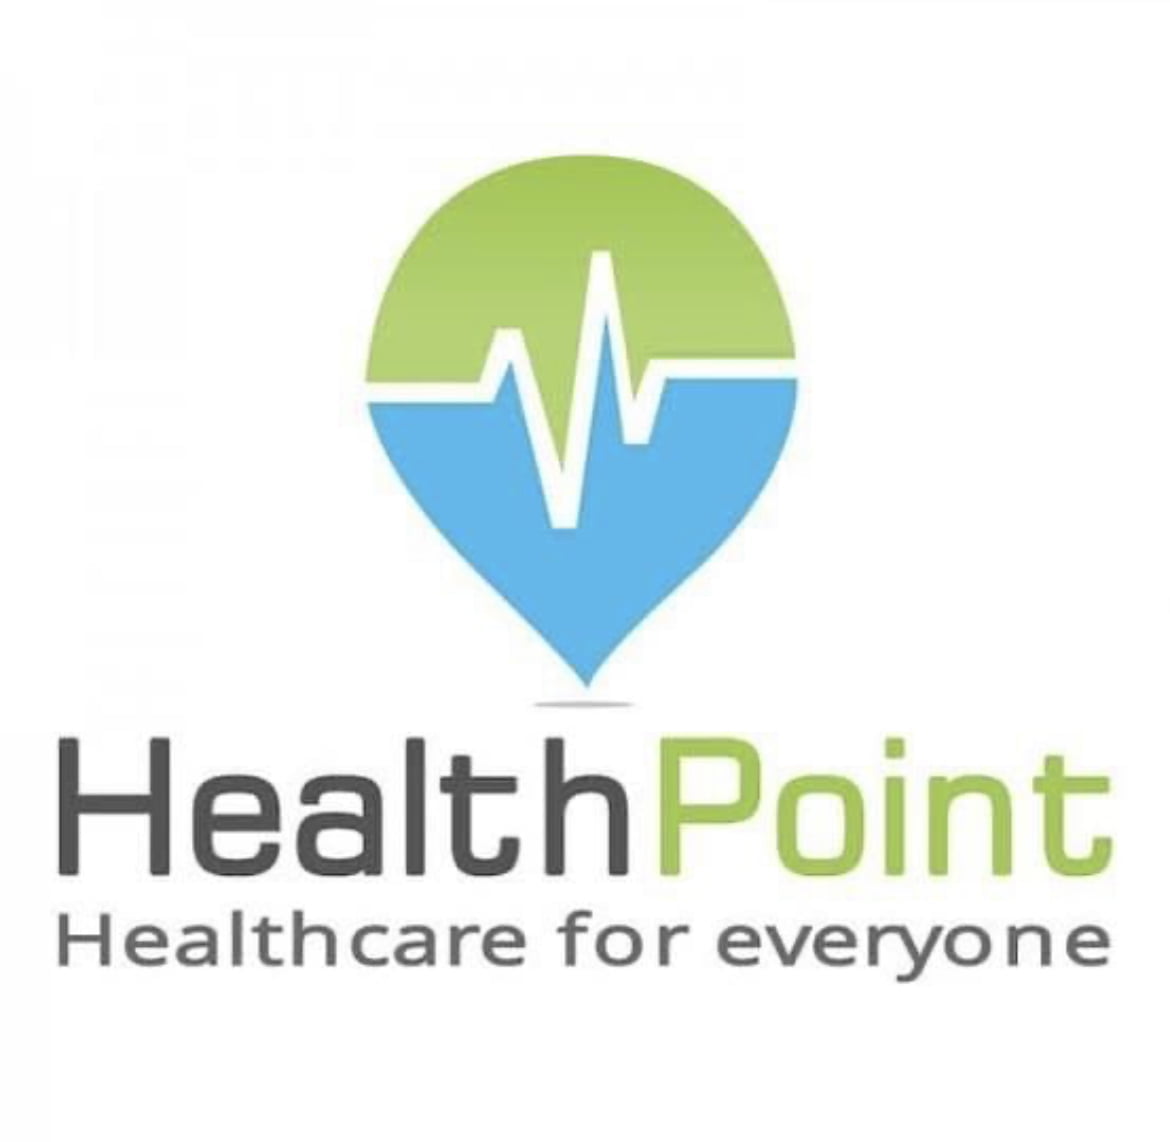 HealthPoint HMO